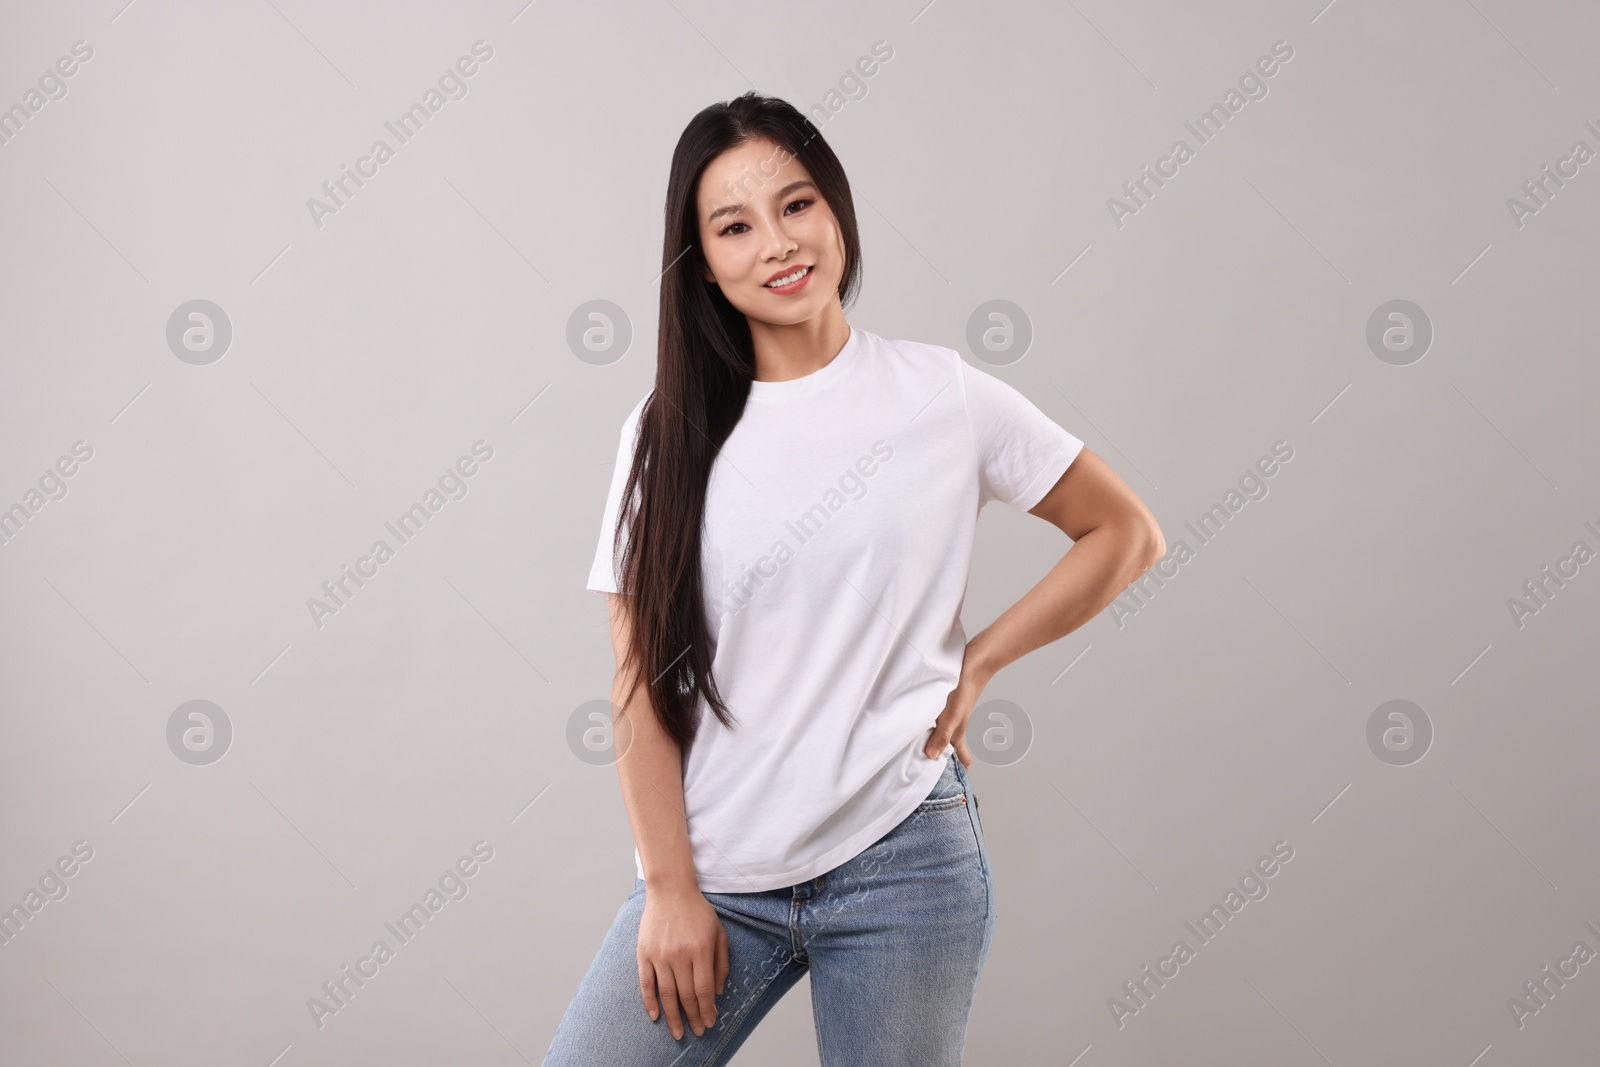 Photo of Woman wearing white t-shirt on light grey background